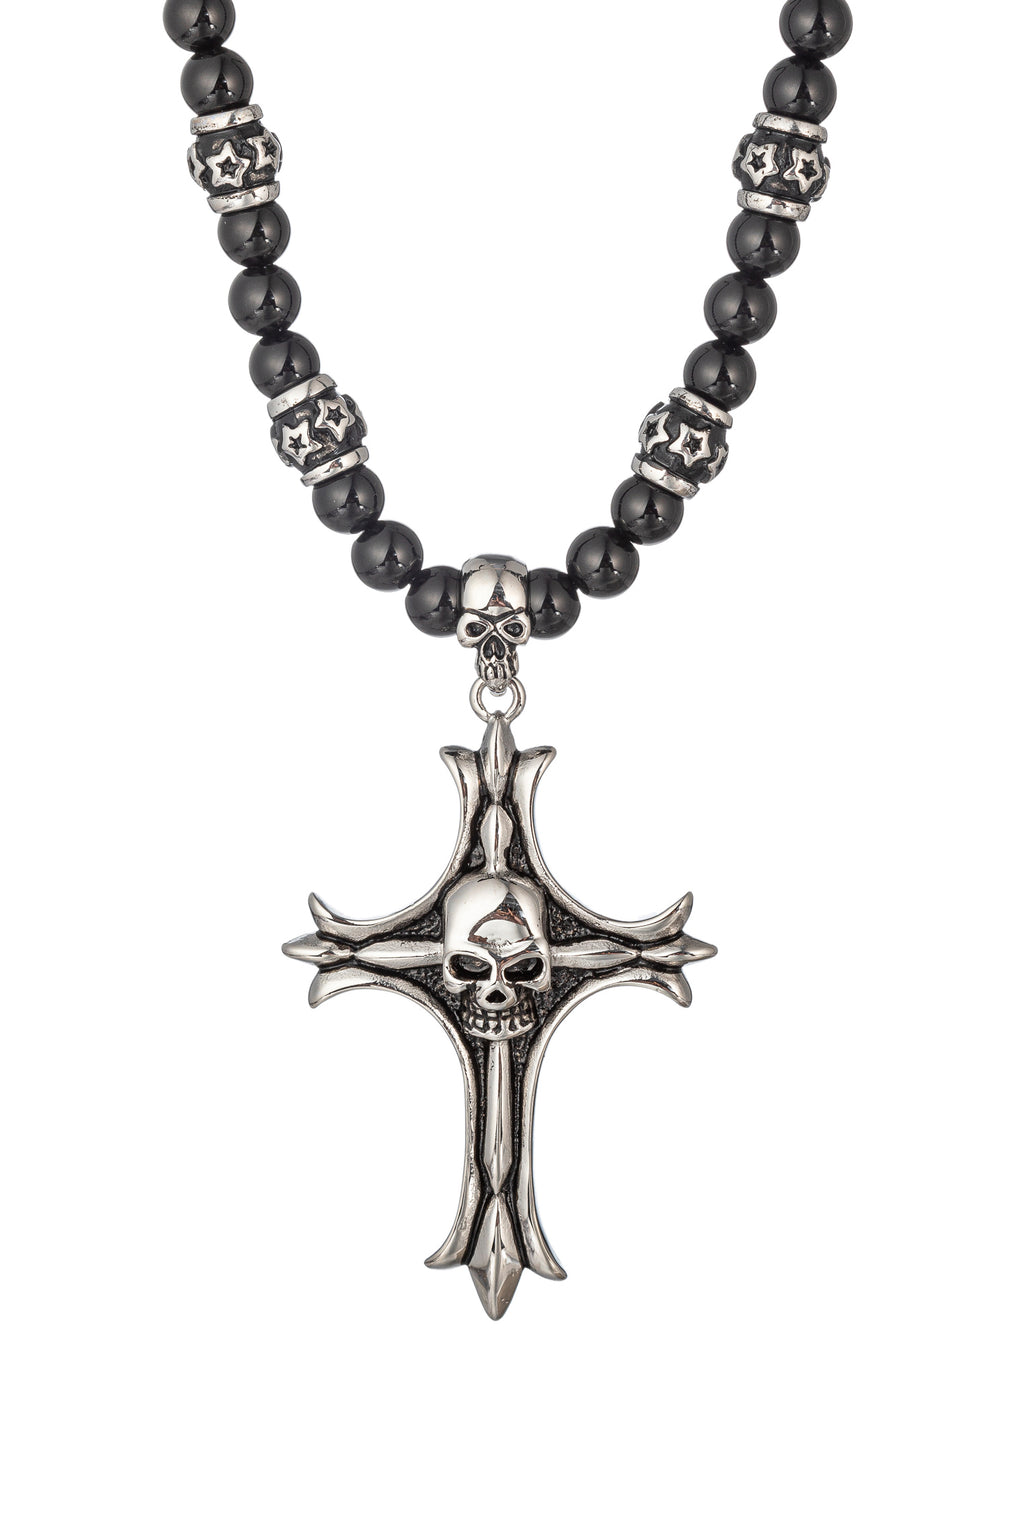 Silver tone titanium skull cross pendant on a beaded necklace.